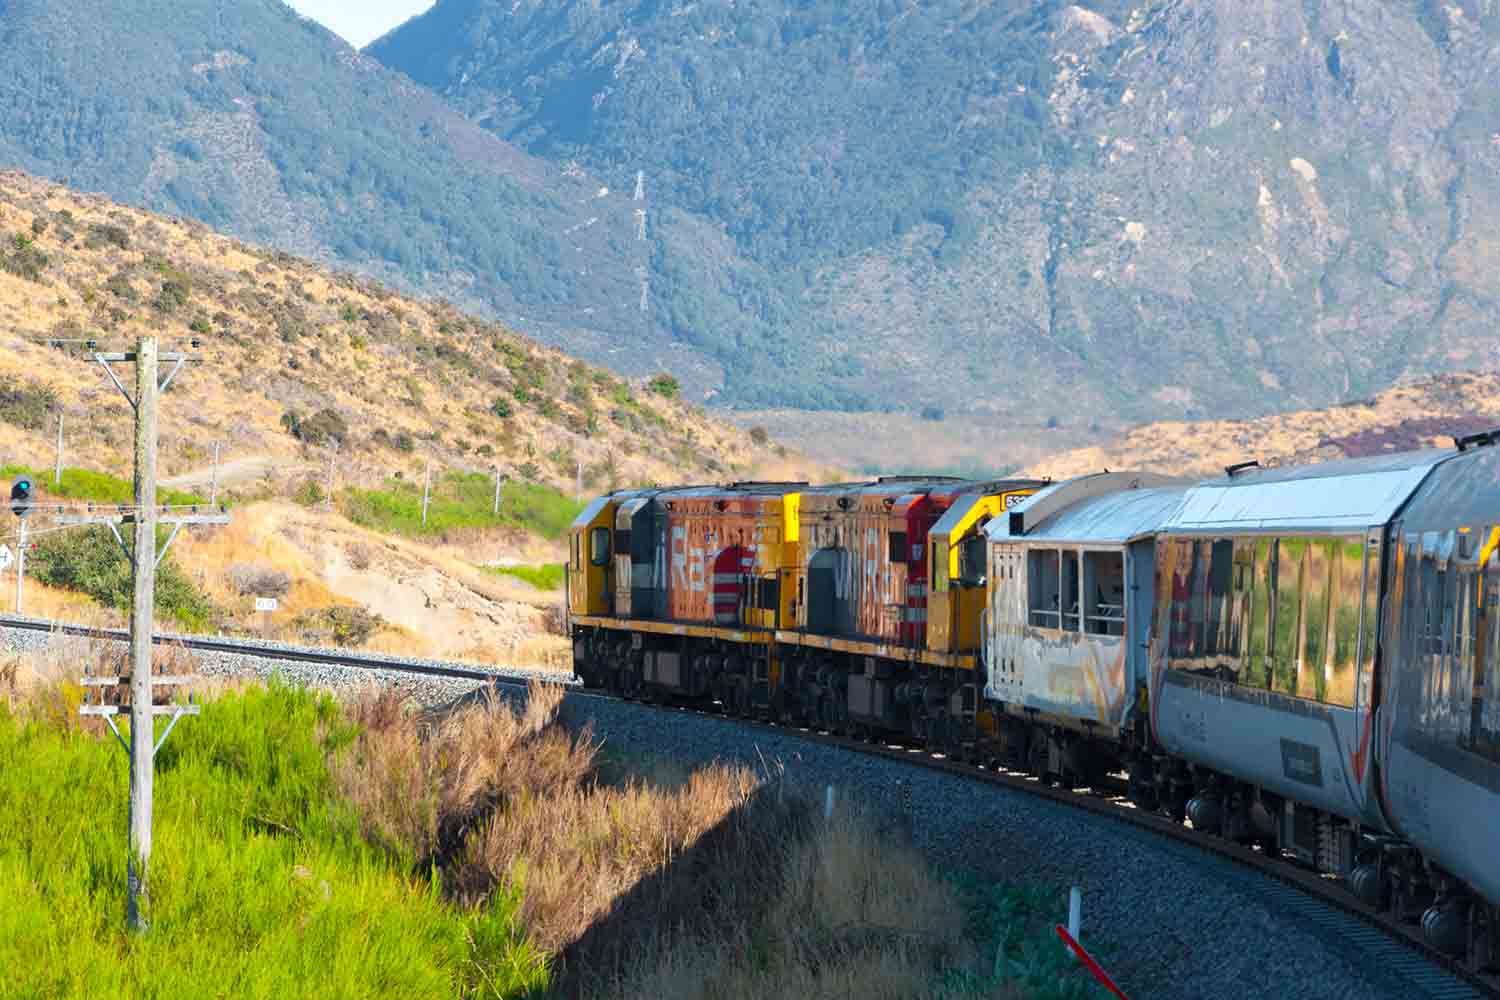 Arthur's Pass National Park, New Zealand, KiwiRail TranzAlpine scenic train, riding among beautiful plains and mountains, popular tourist transportation on South Island